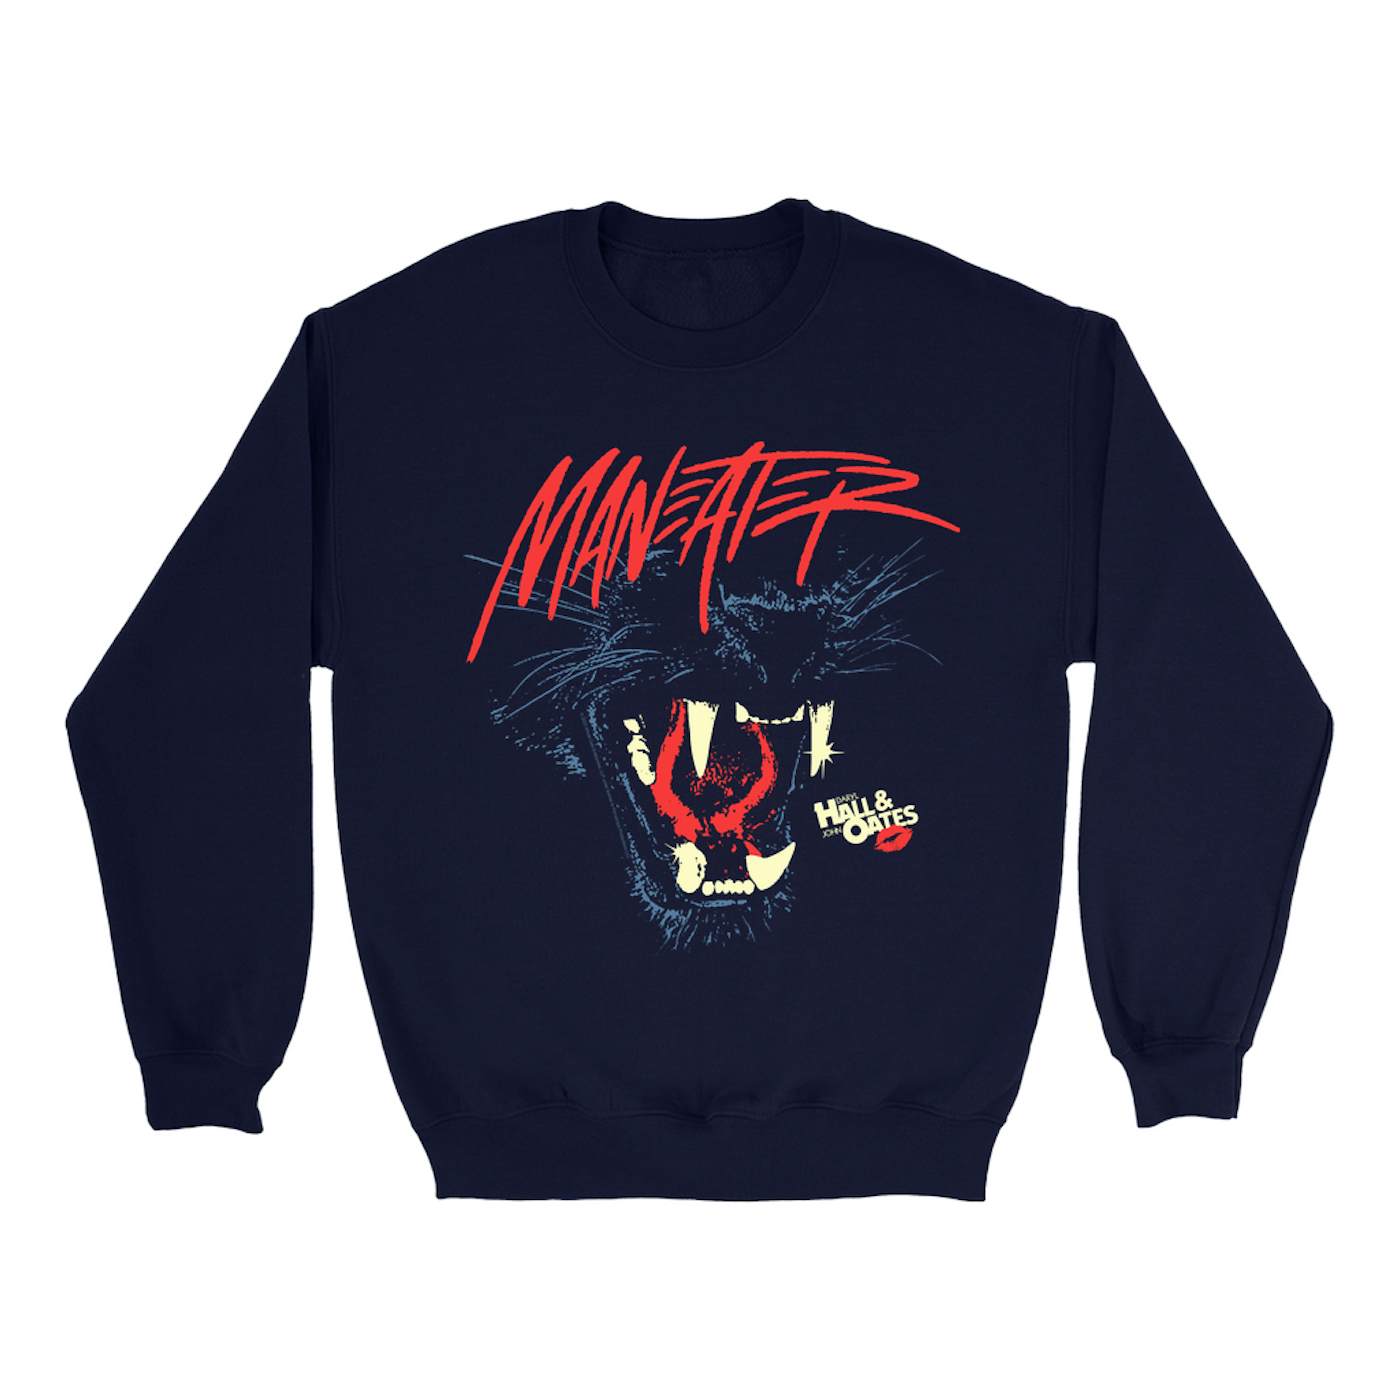 Daryl Hall & John Oates Sweatshirt | Maneater Hall & Oates Sweatshirt